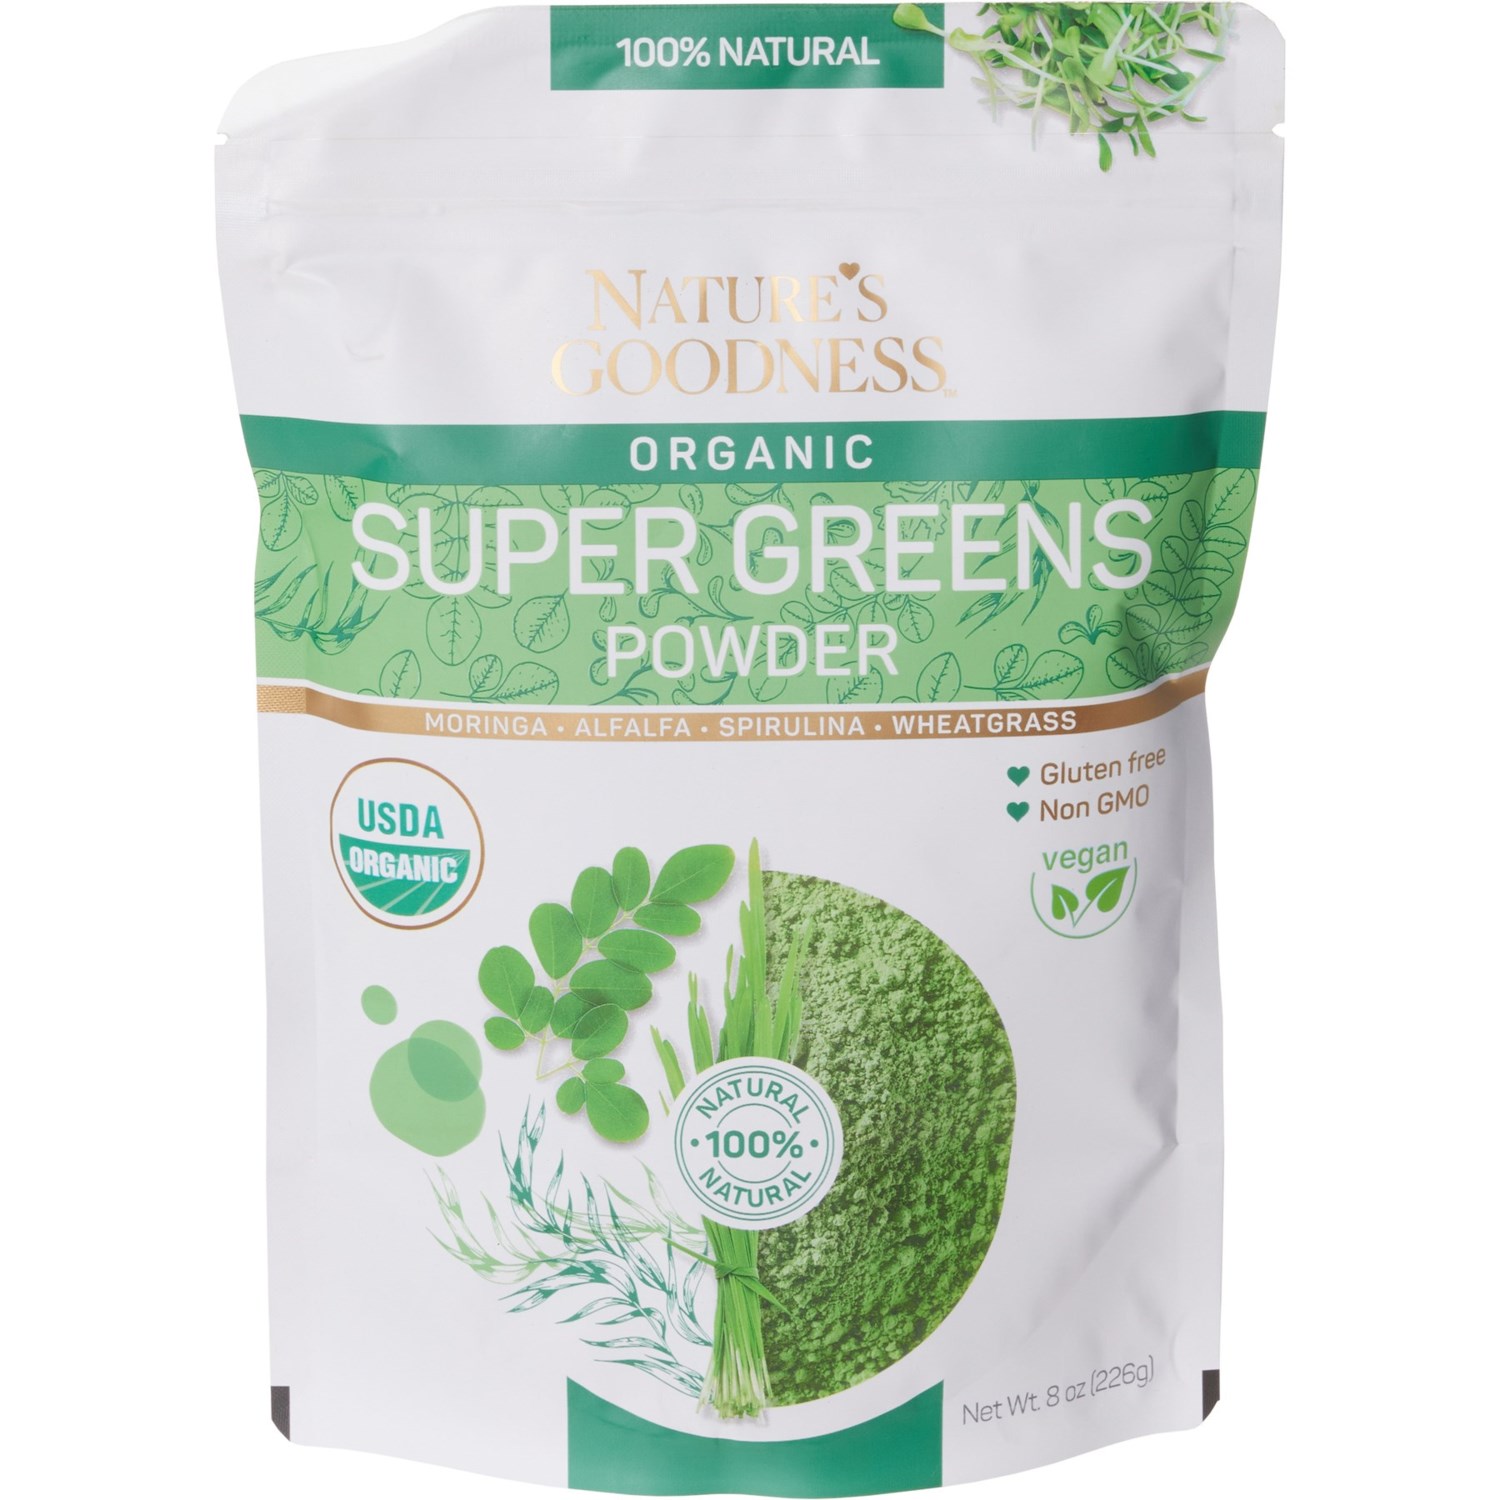 Organic Super Greens